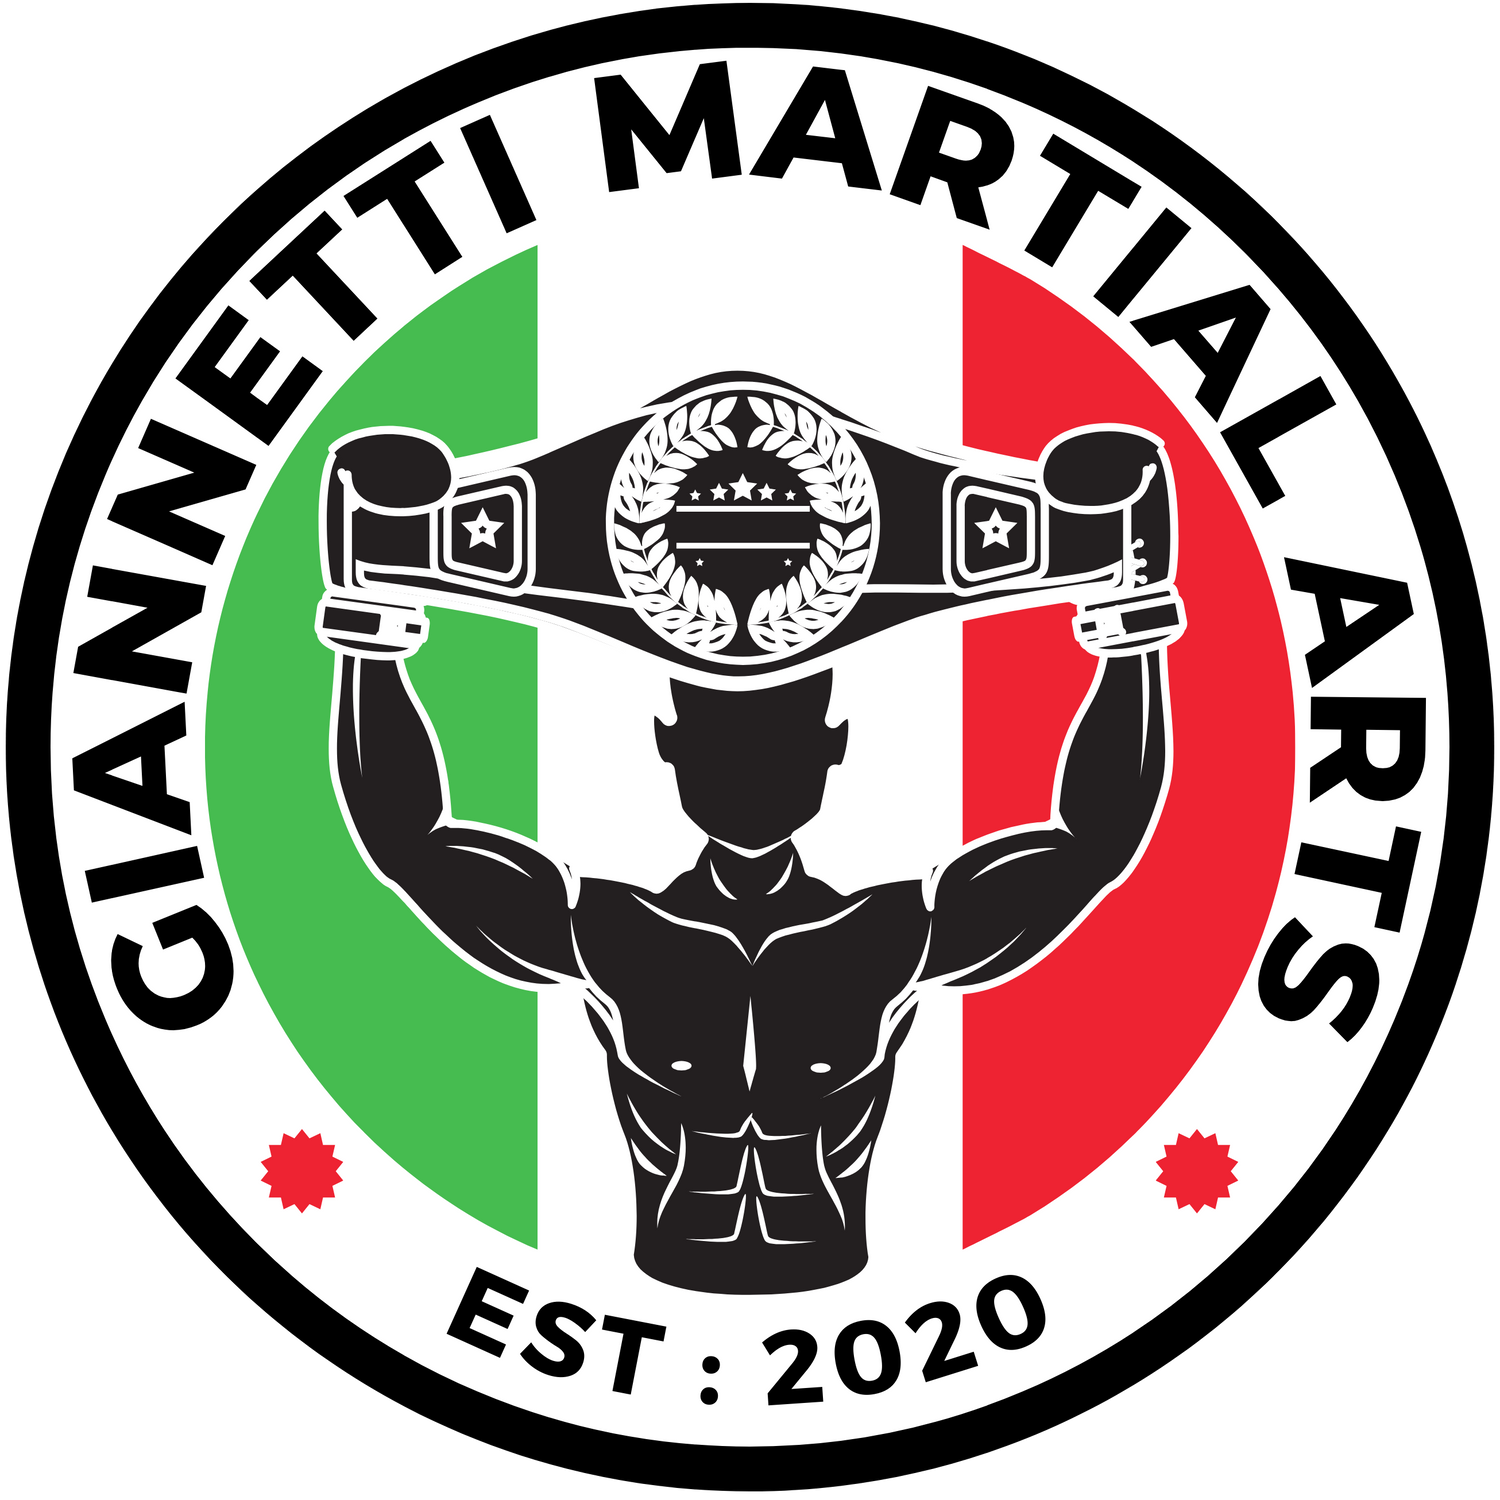 Giannetti Martial Arts